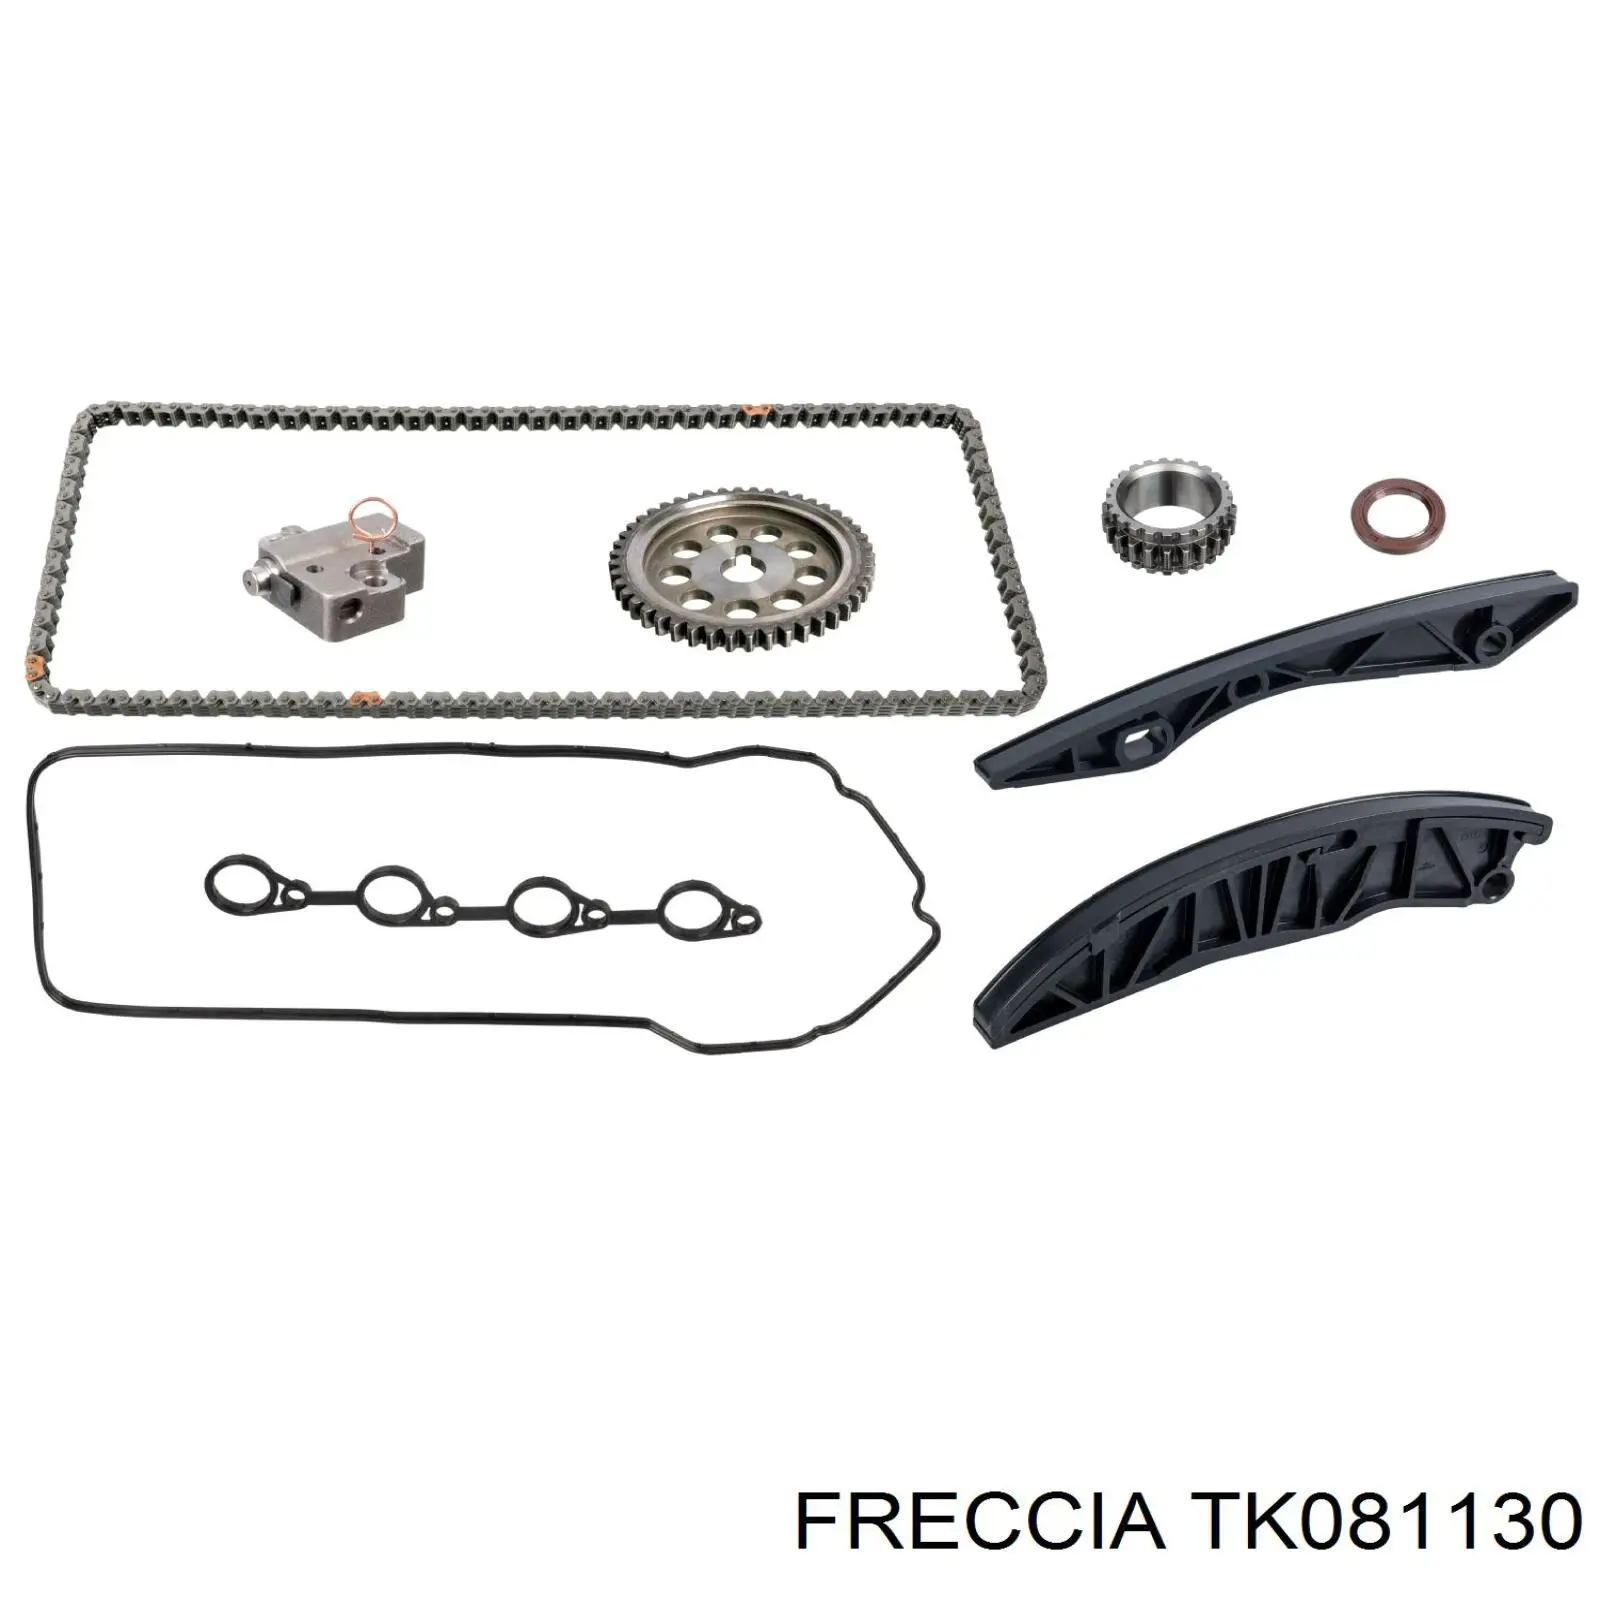 TK081130 Freccia комплект цепи грм